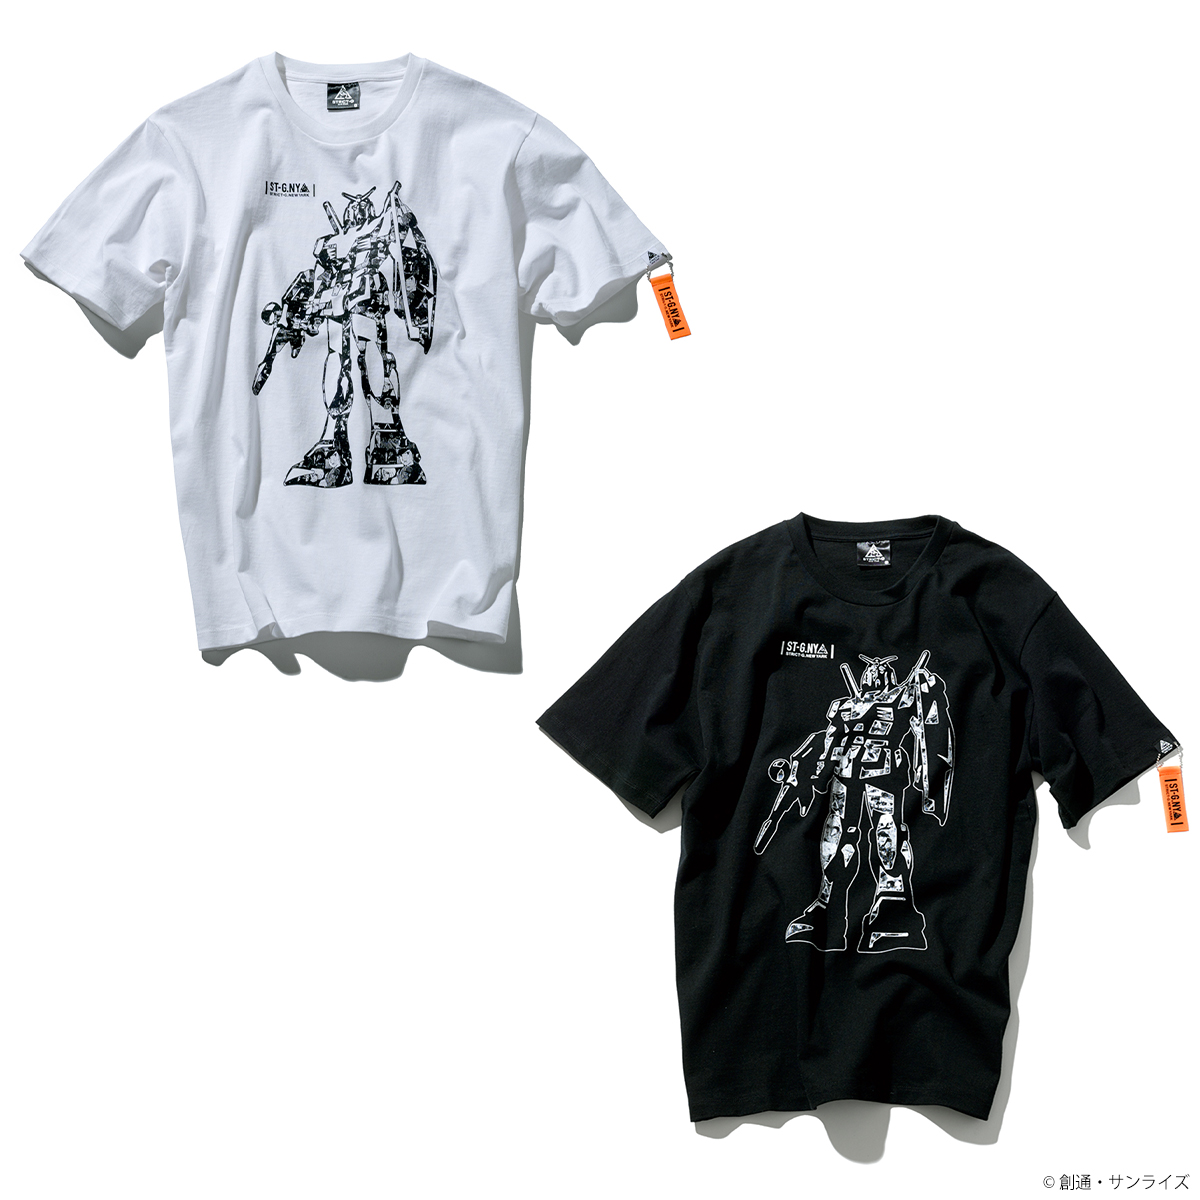 STRICT-G NEW YARK Tシャツ MS Collage ガンダム柄